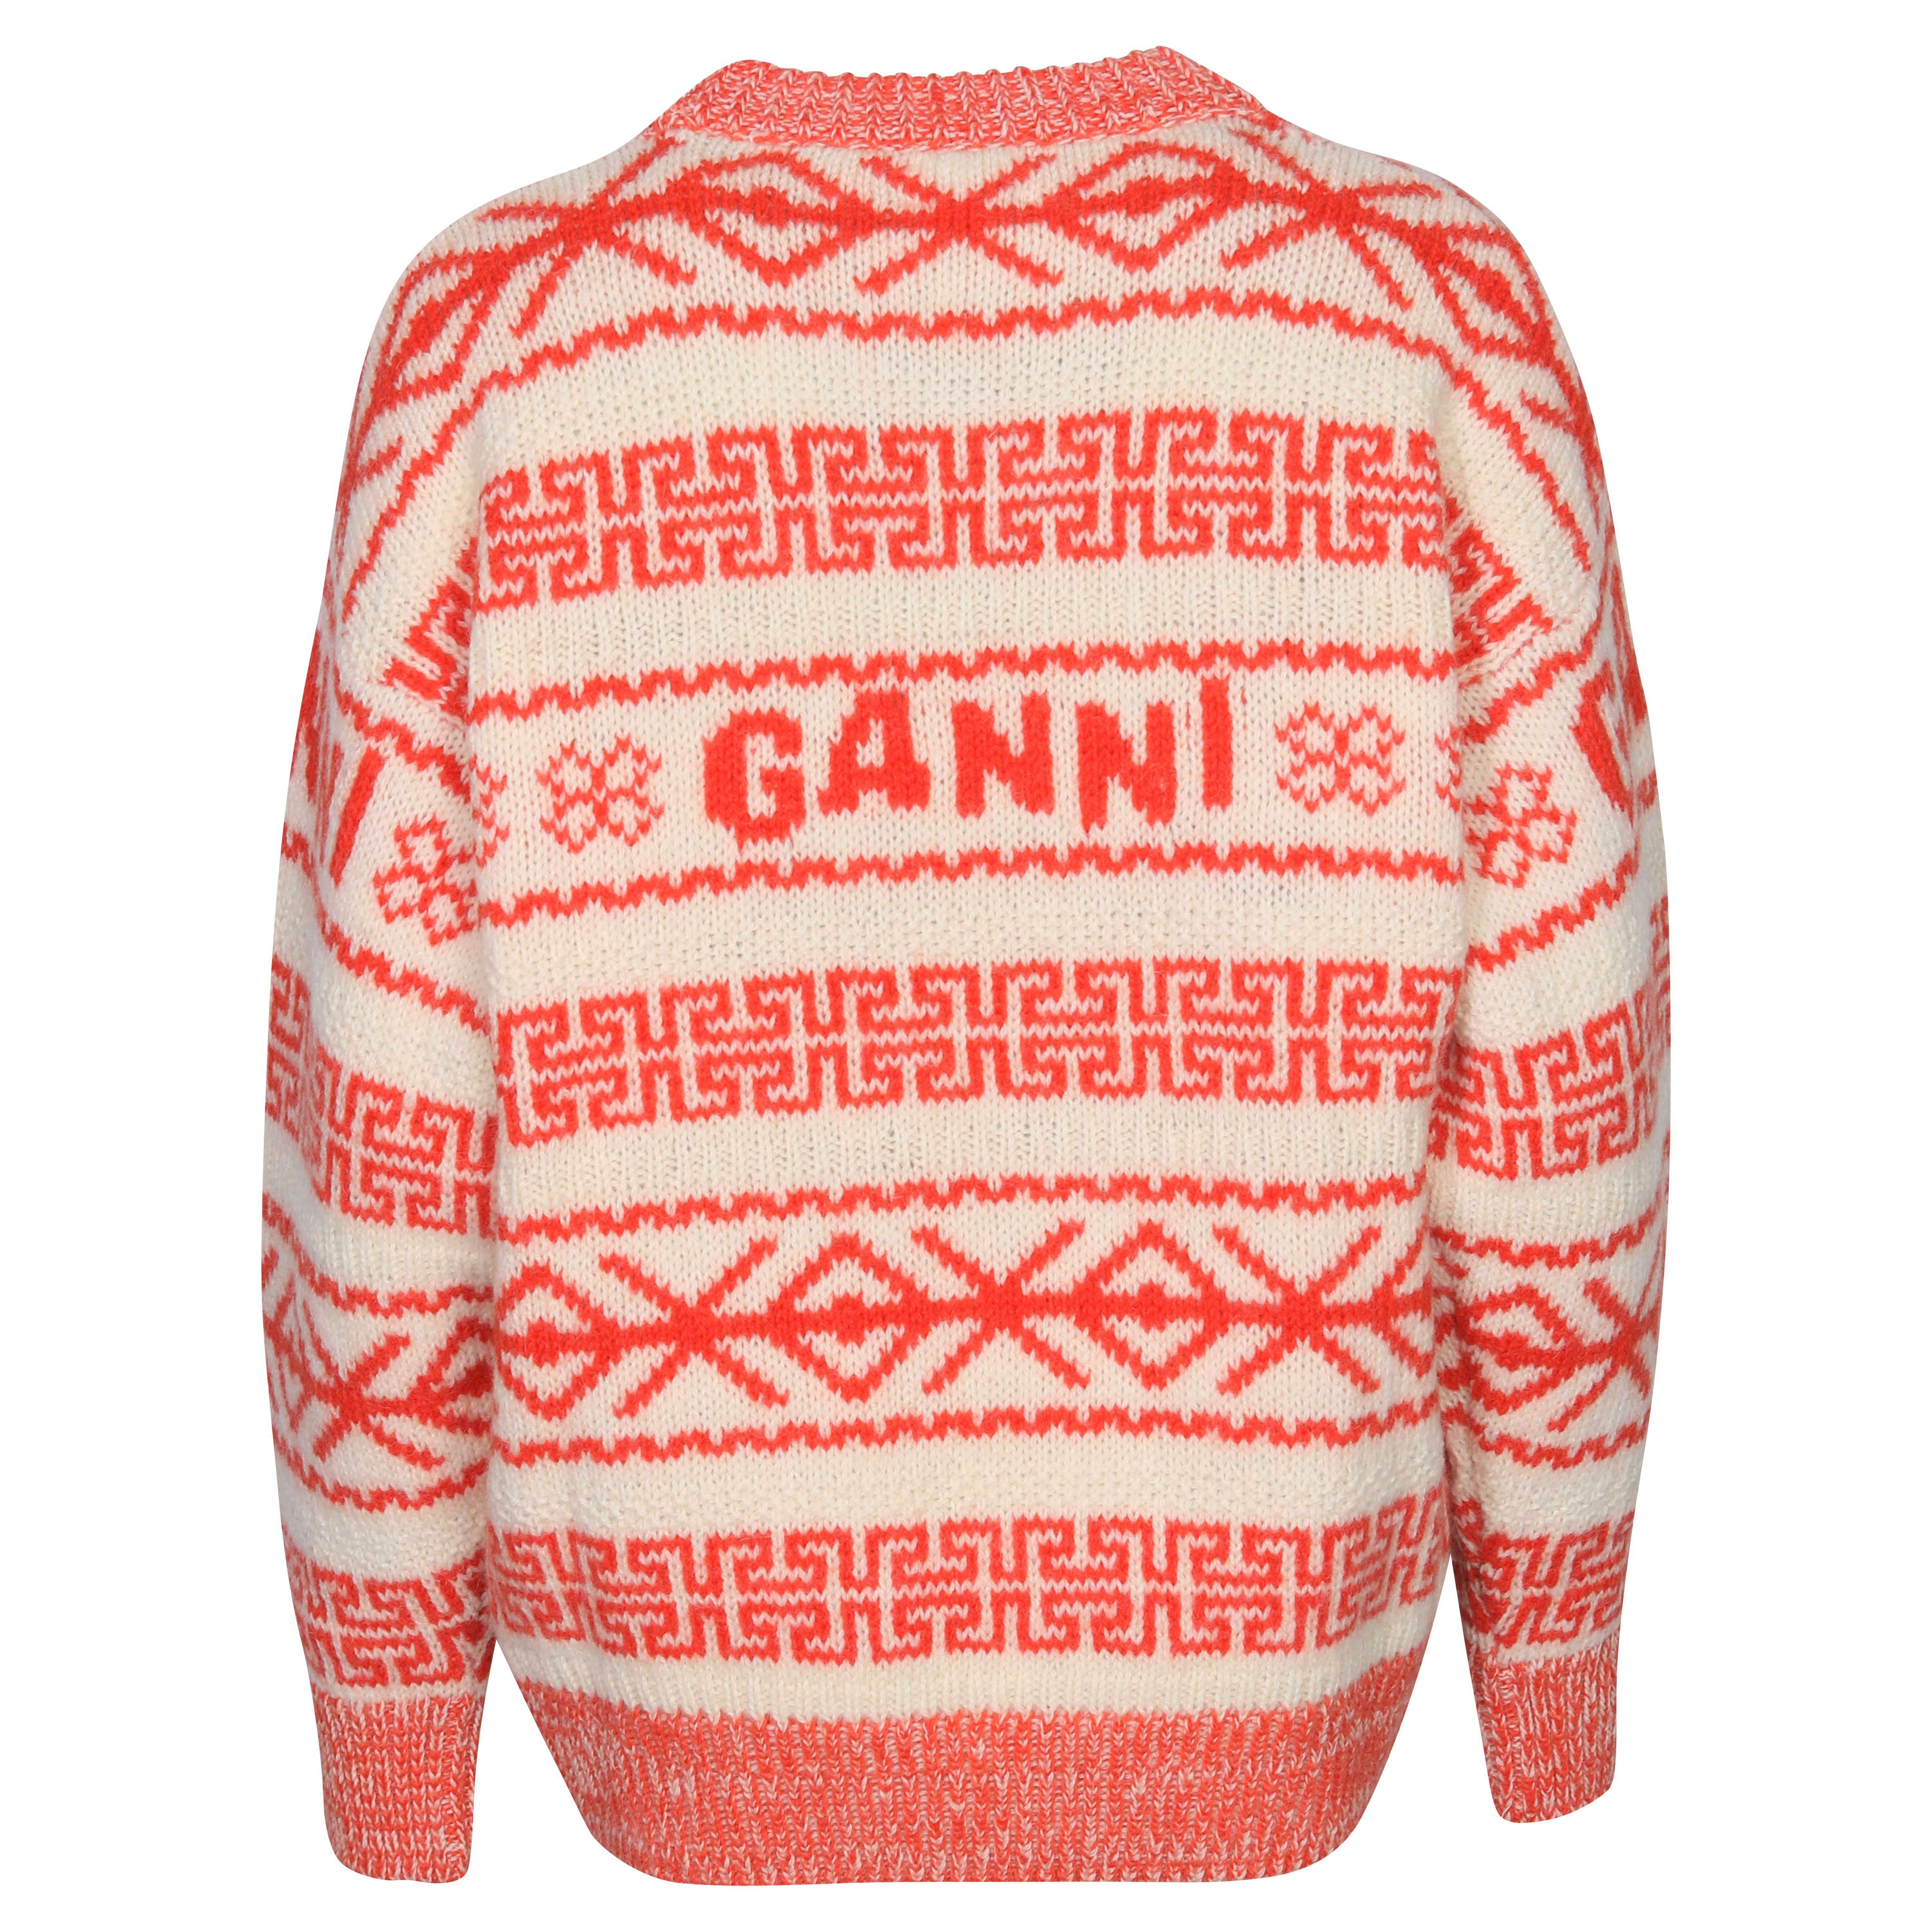 Ganni Knit Sweater in Egret S